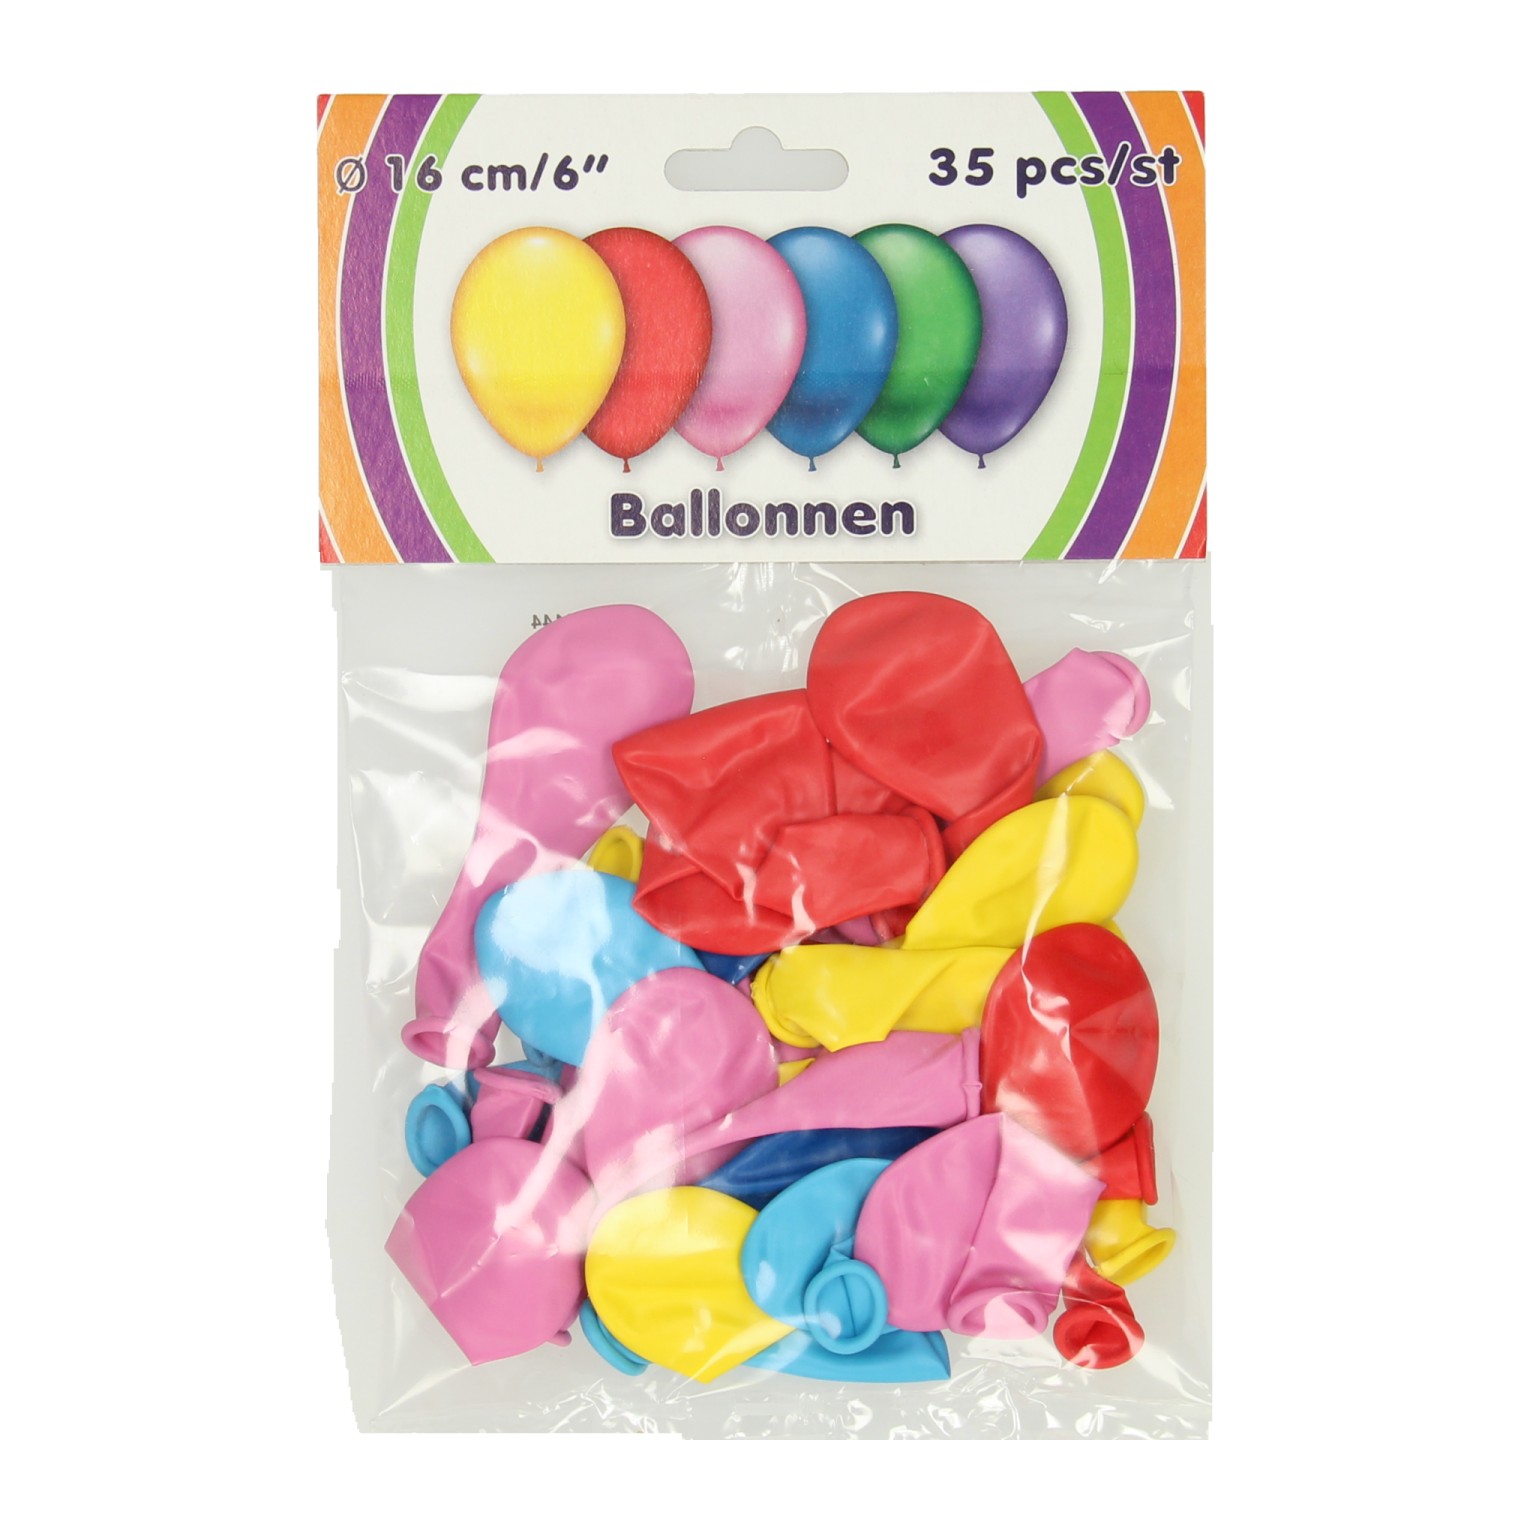 Luftballons, 35 Stück.